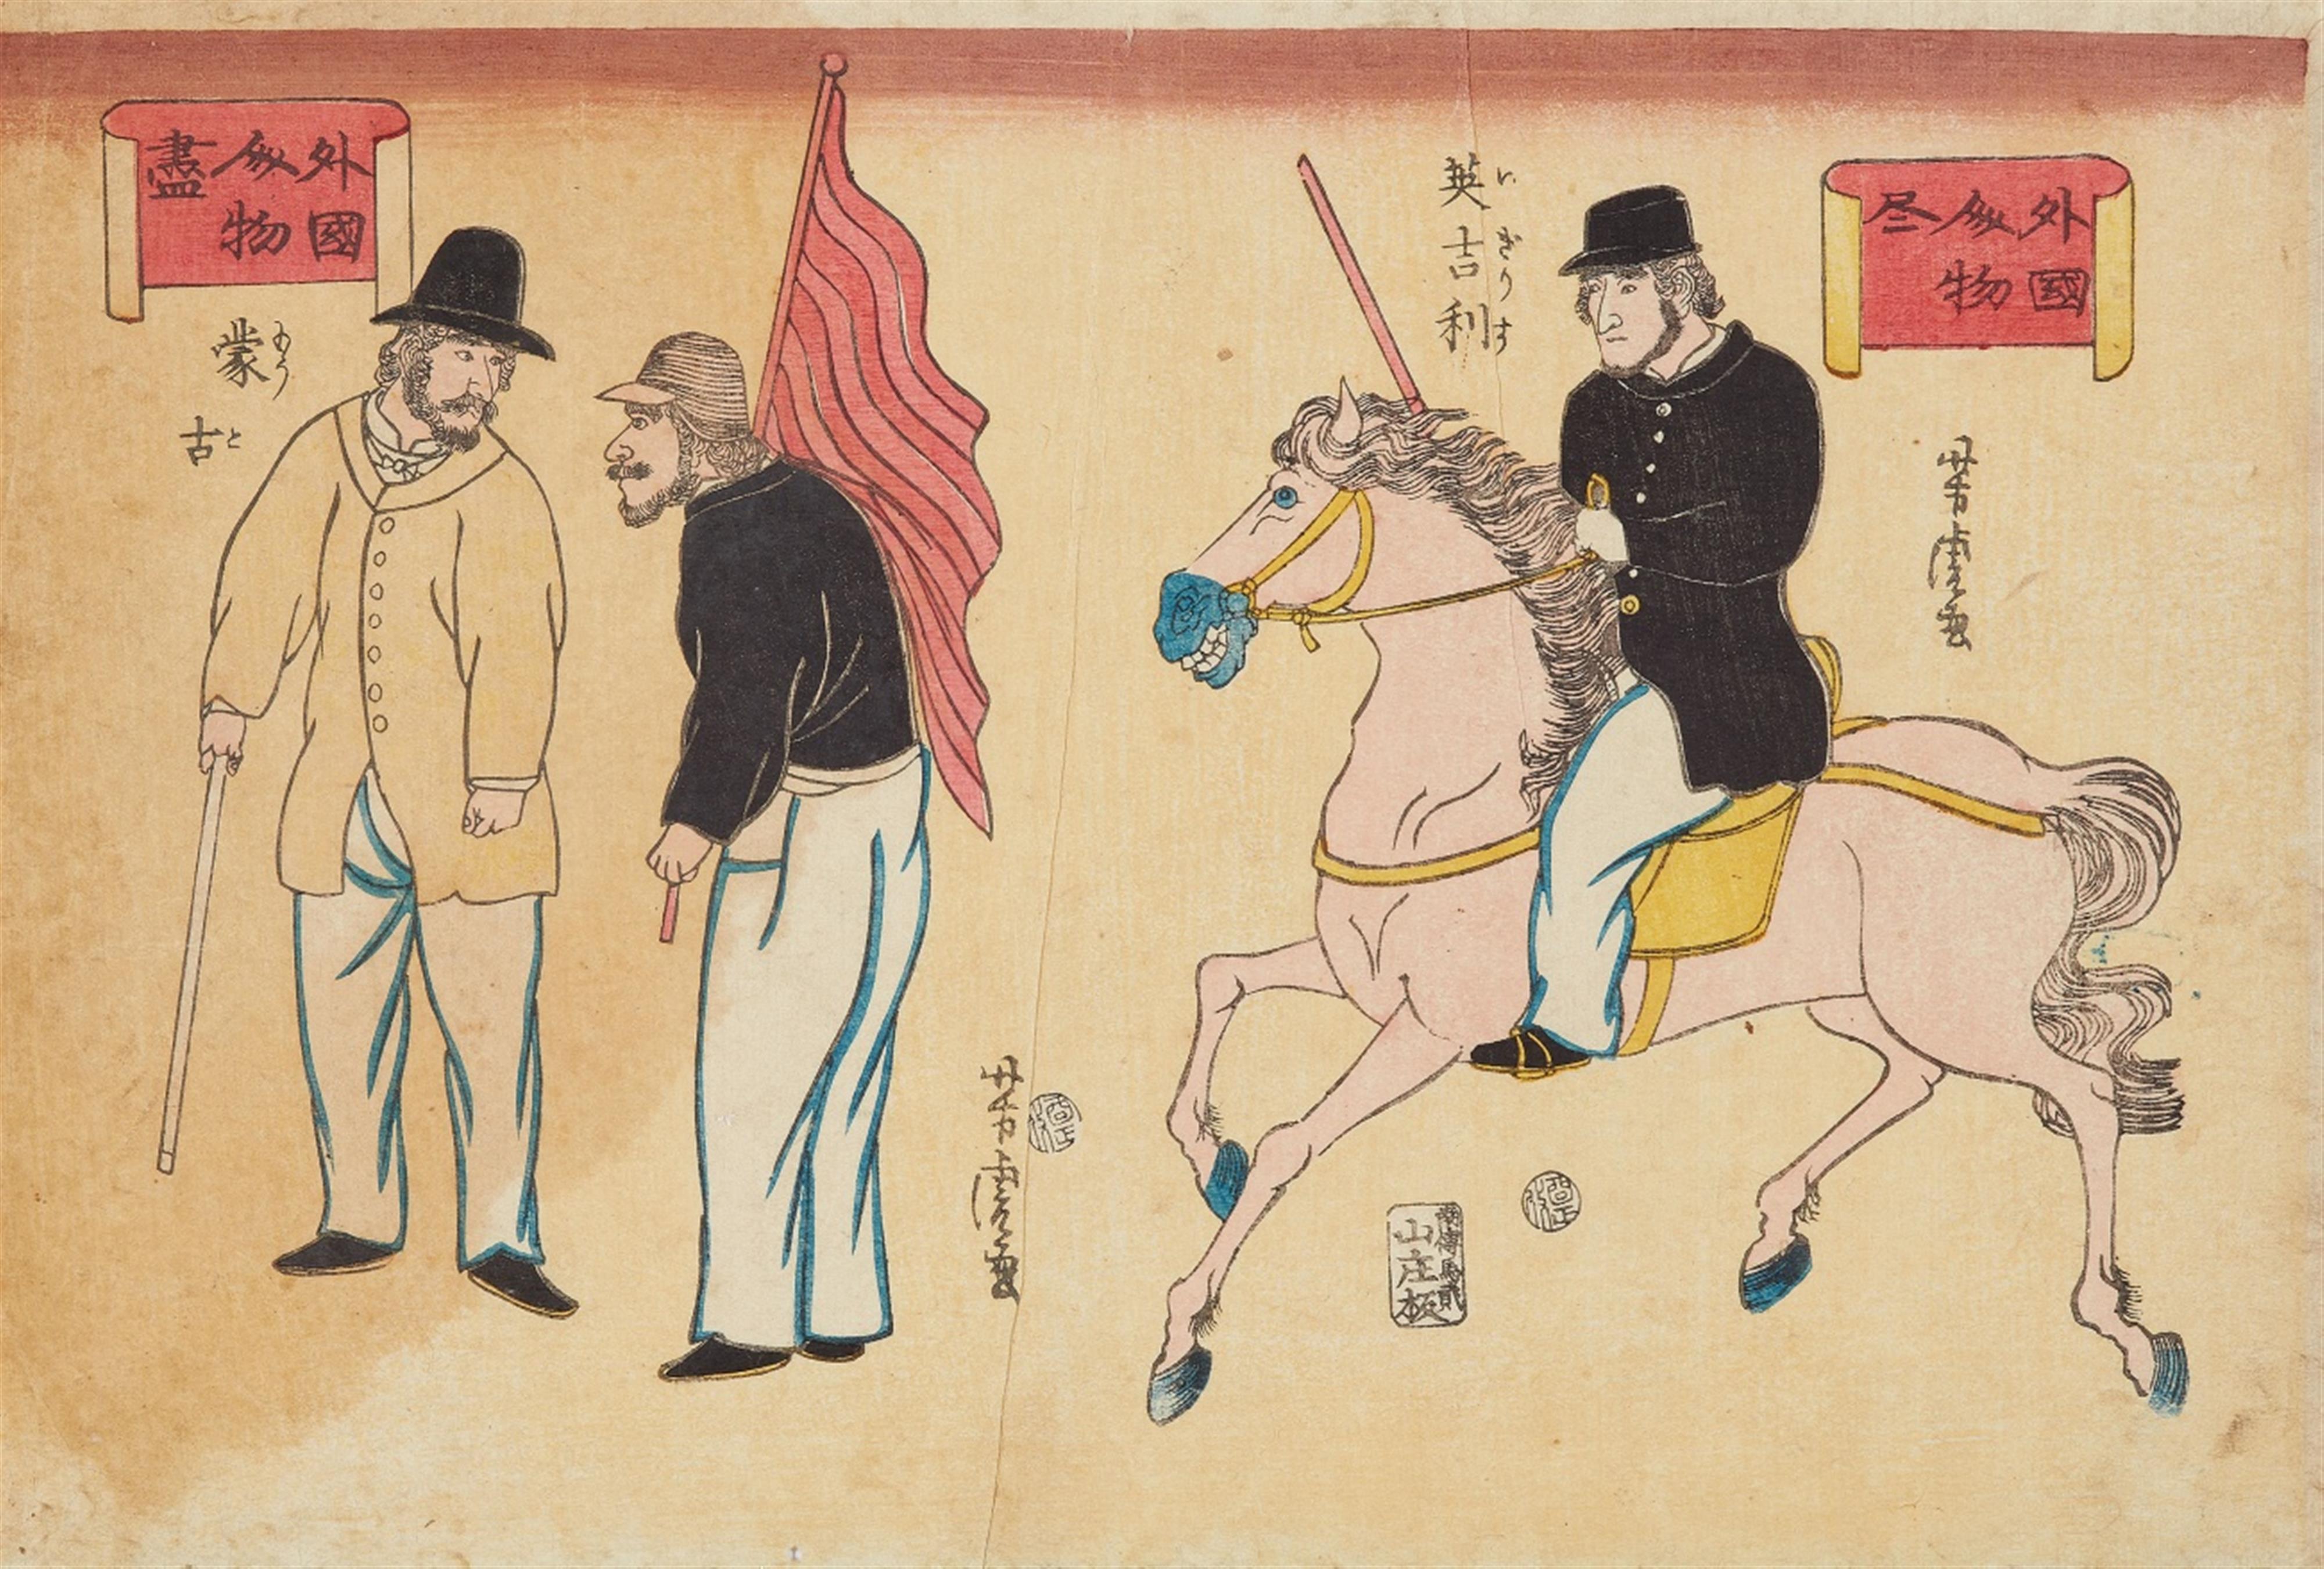 Utagawa Yoshitomi (act. around 1848-80) and Utagawa Yoshitora (act. around 1836-1887) - image-2